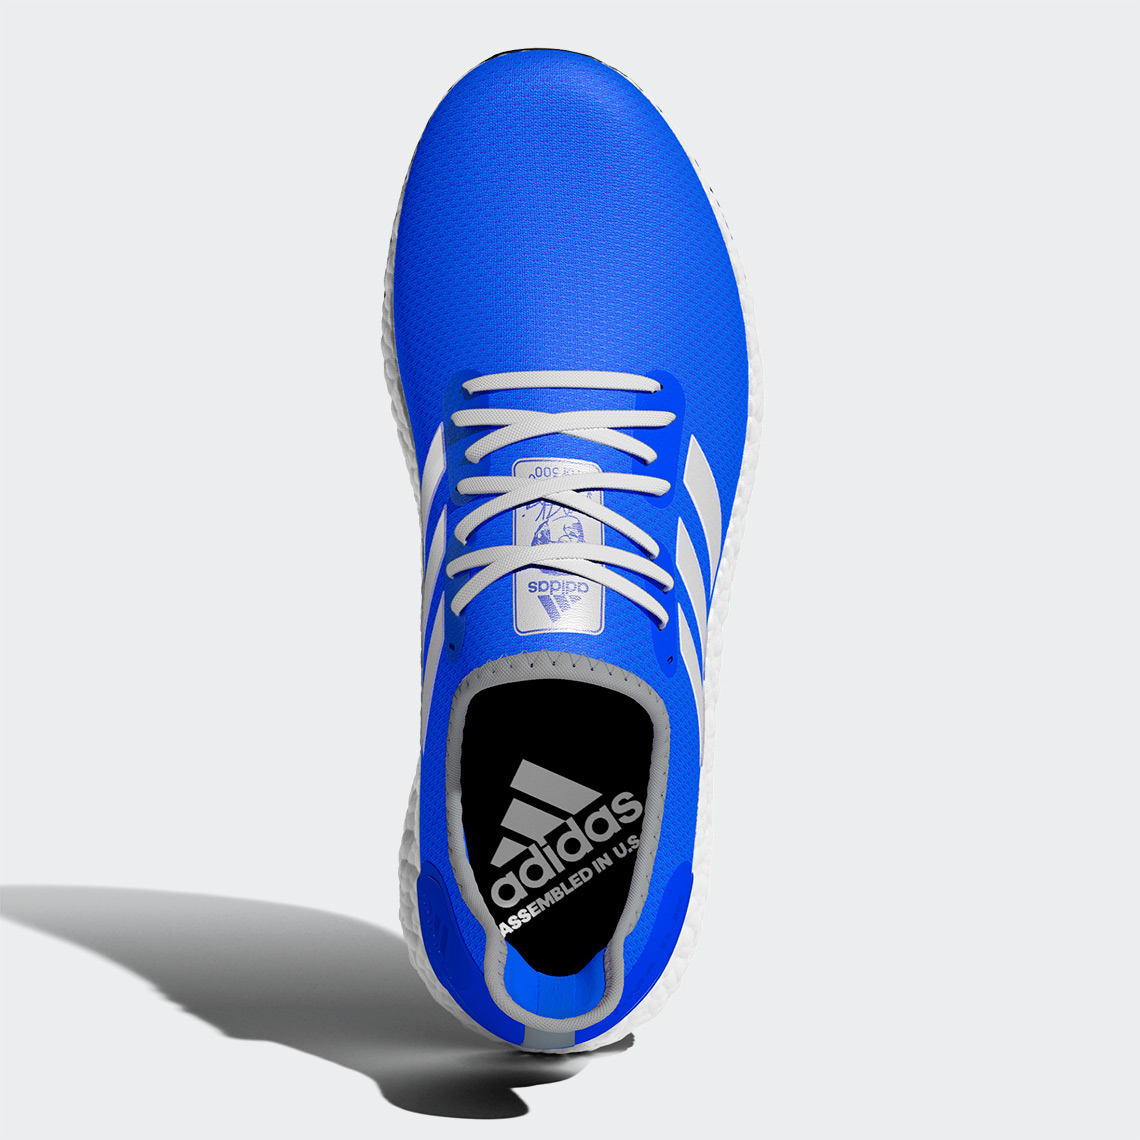 Adidas Am4bjk Speedfactory Billie Jean King 4